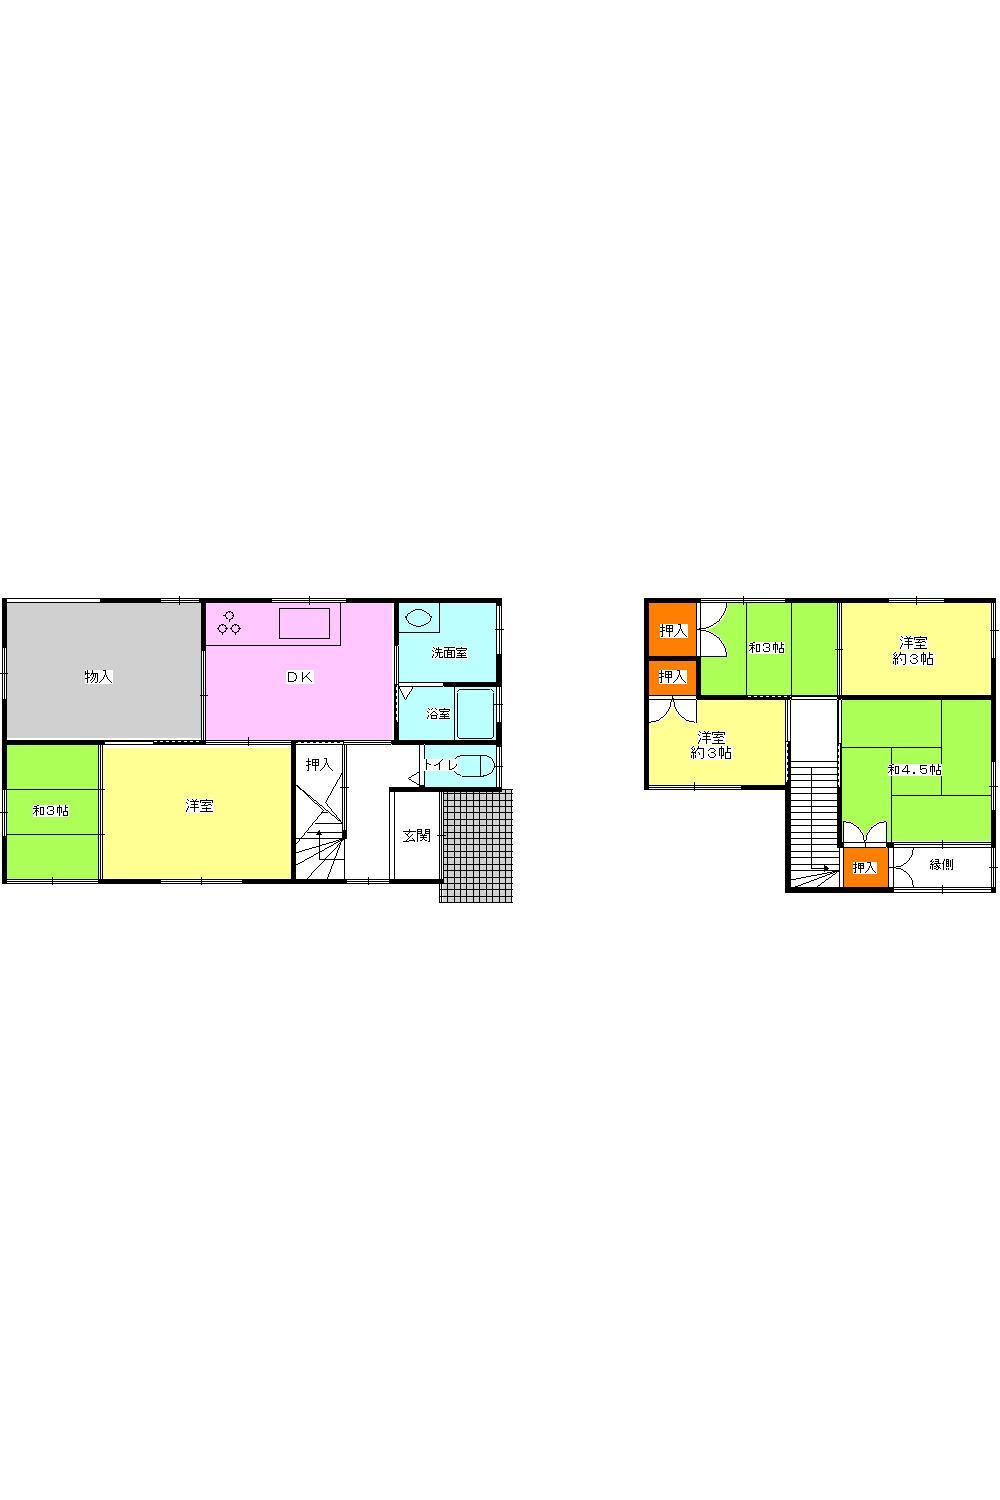 Floor plan. 15.8 million yen, 6DK + S (storeroom), Land area 102.21 sq m , Building area 73.69 sq m